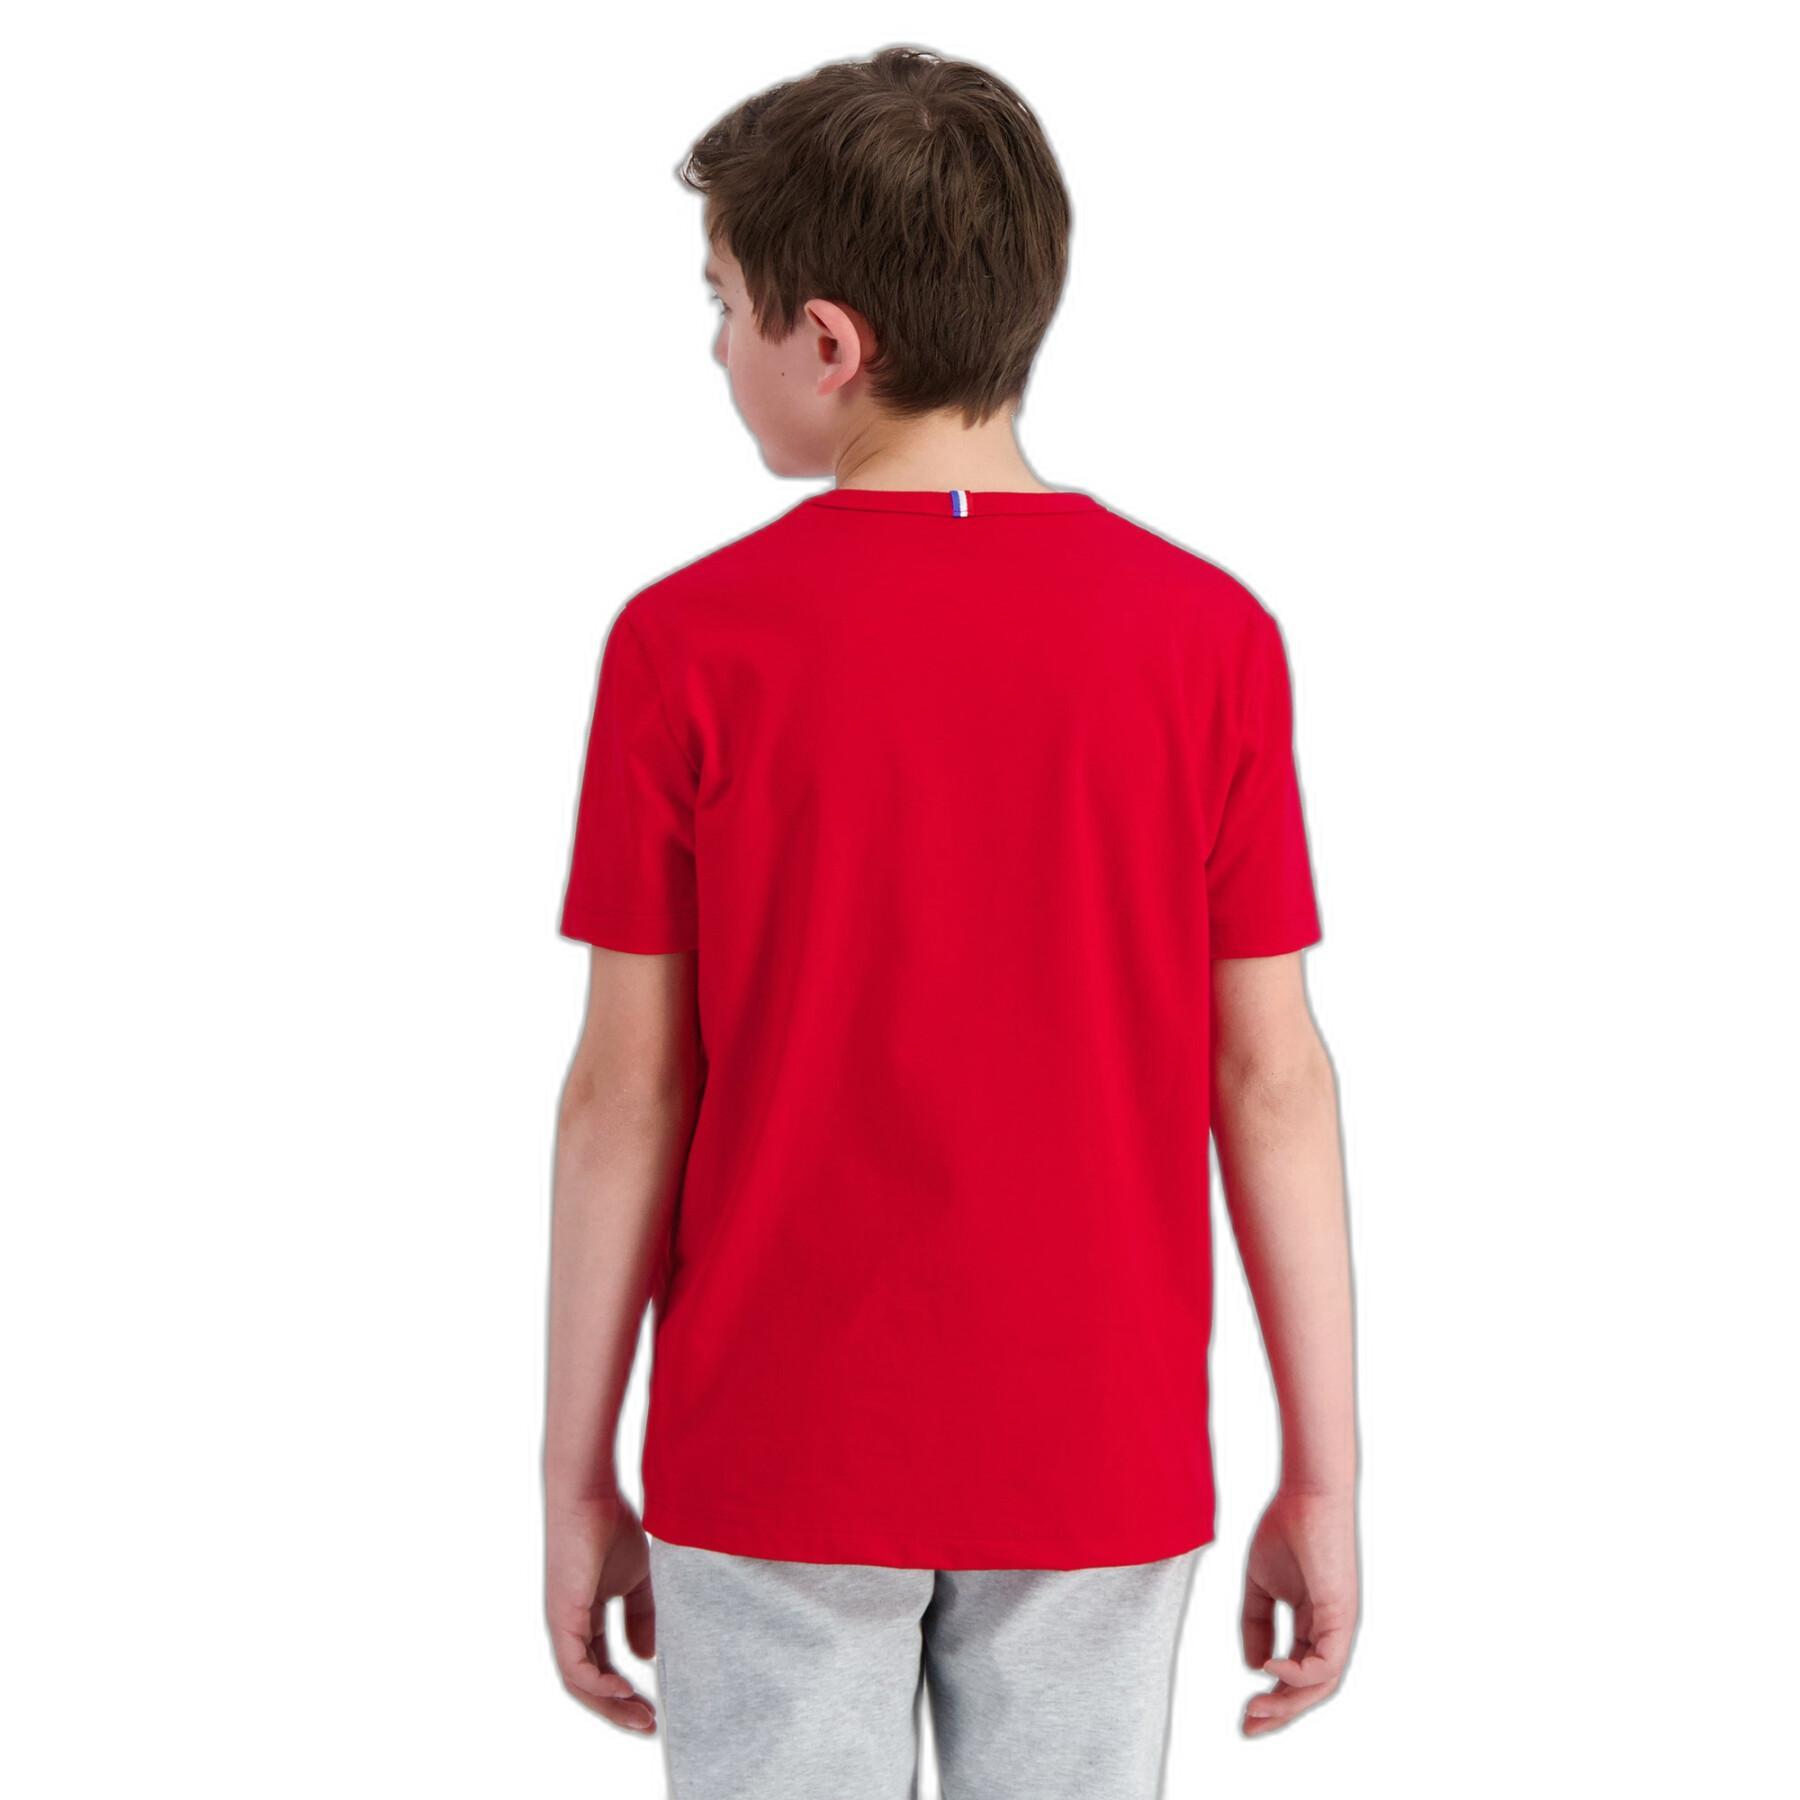 Child's T-shirt Le Coq Sportif ESS N°1